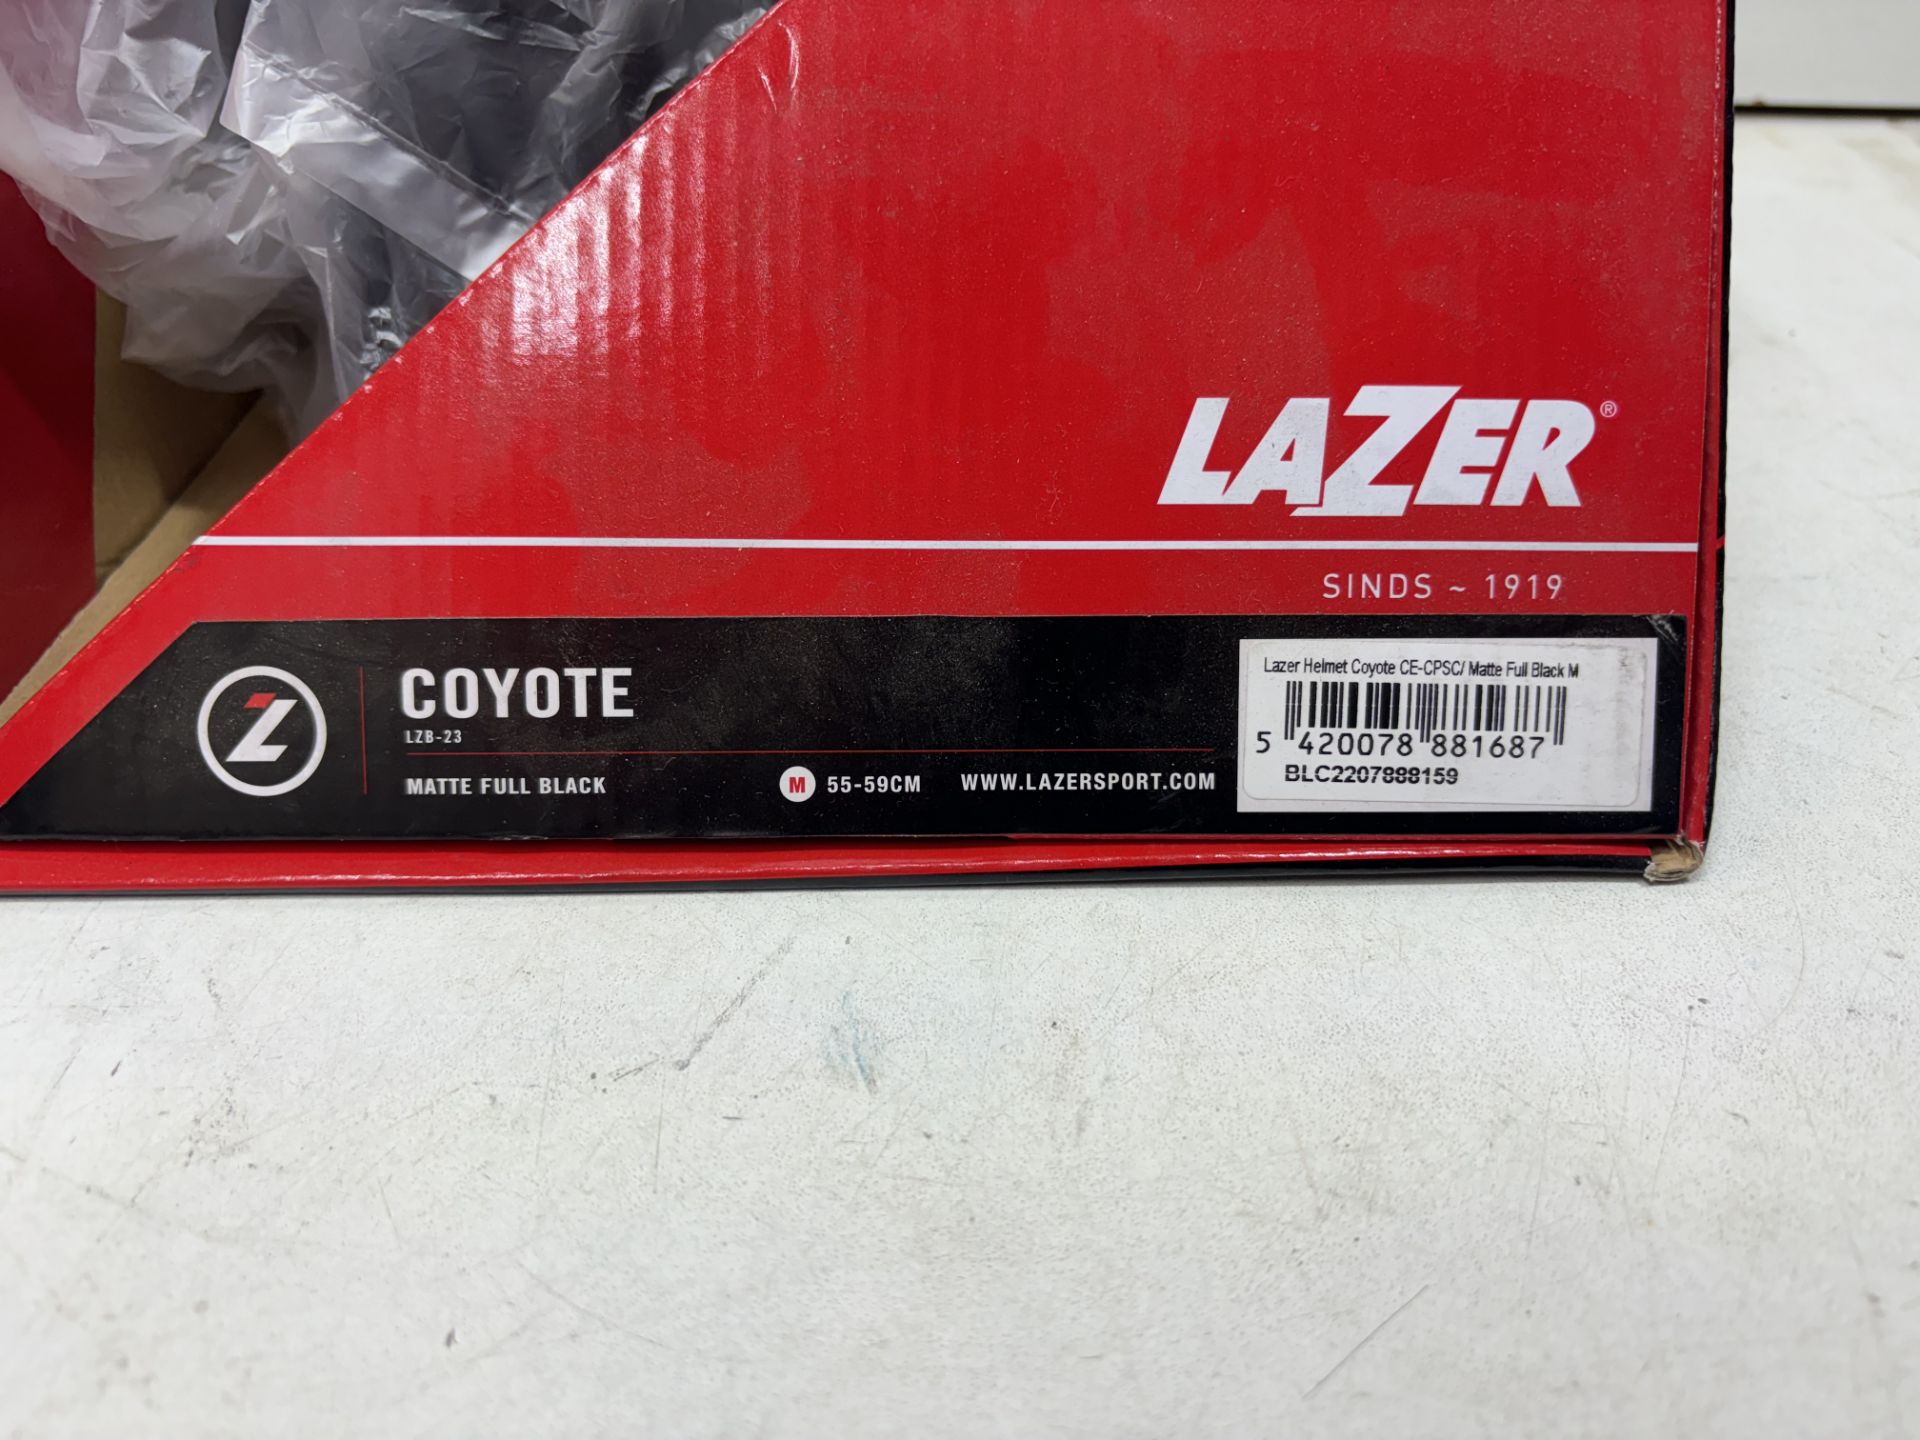 Lazer Coyote MTB Helmet, Size M (55-59cm) - Matte Full Black - Image 3 of 3